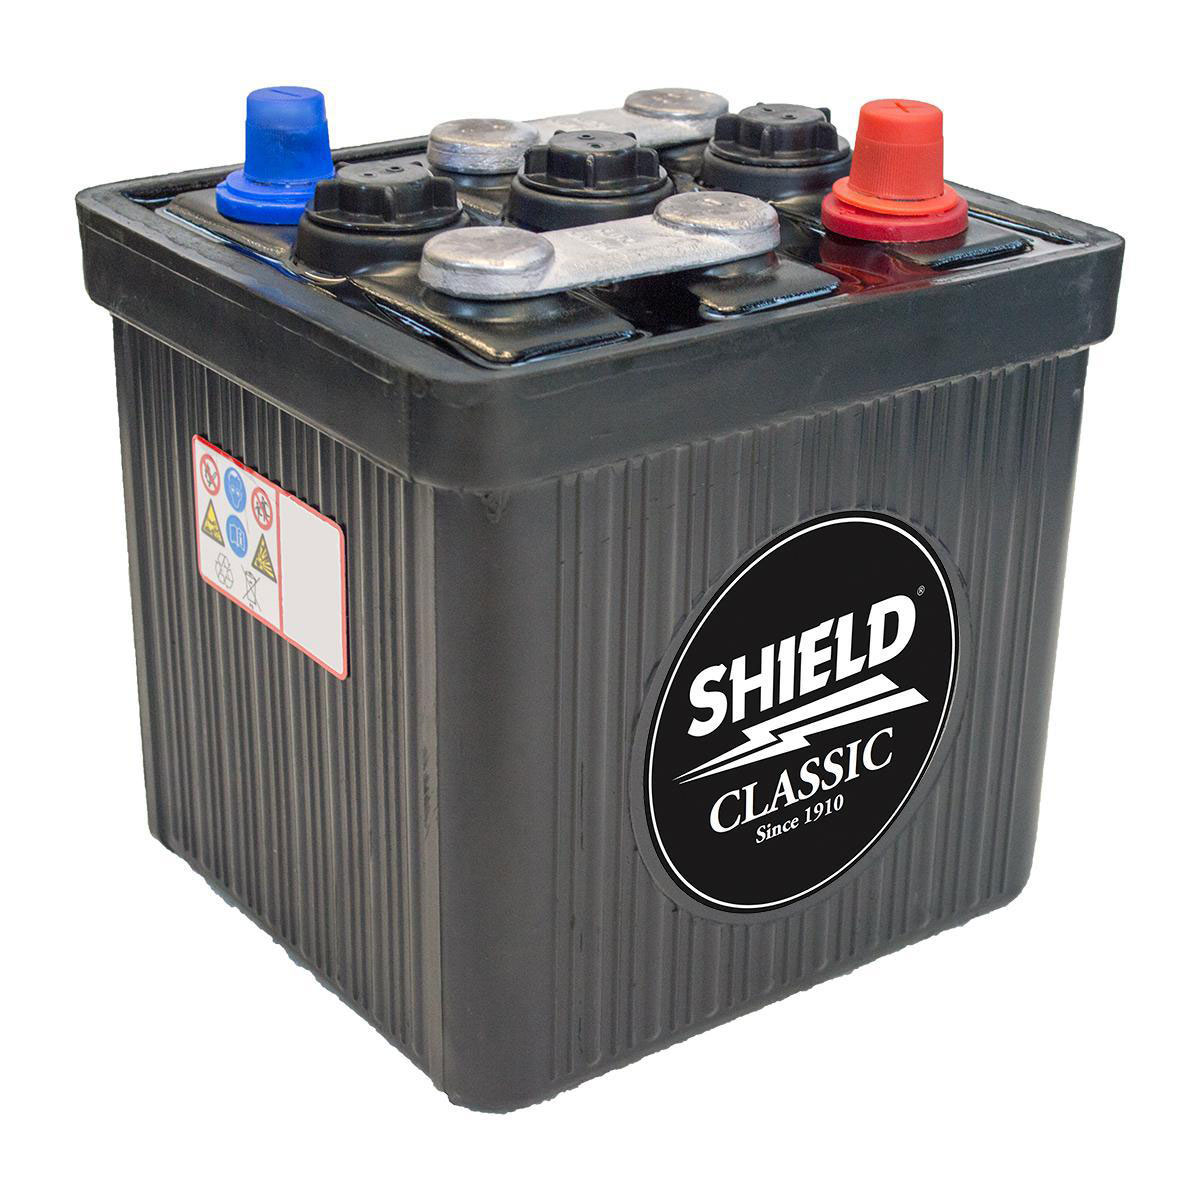 Shield-401-6v-Classic-Car-Battery.jpg